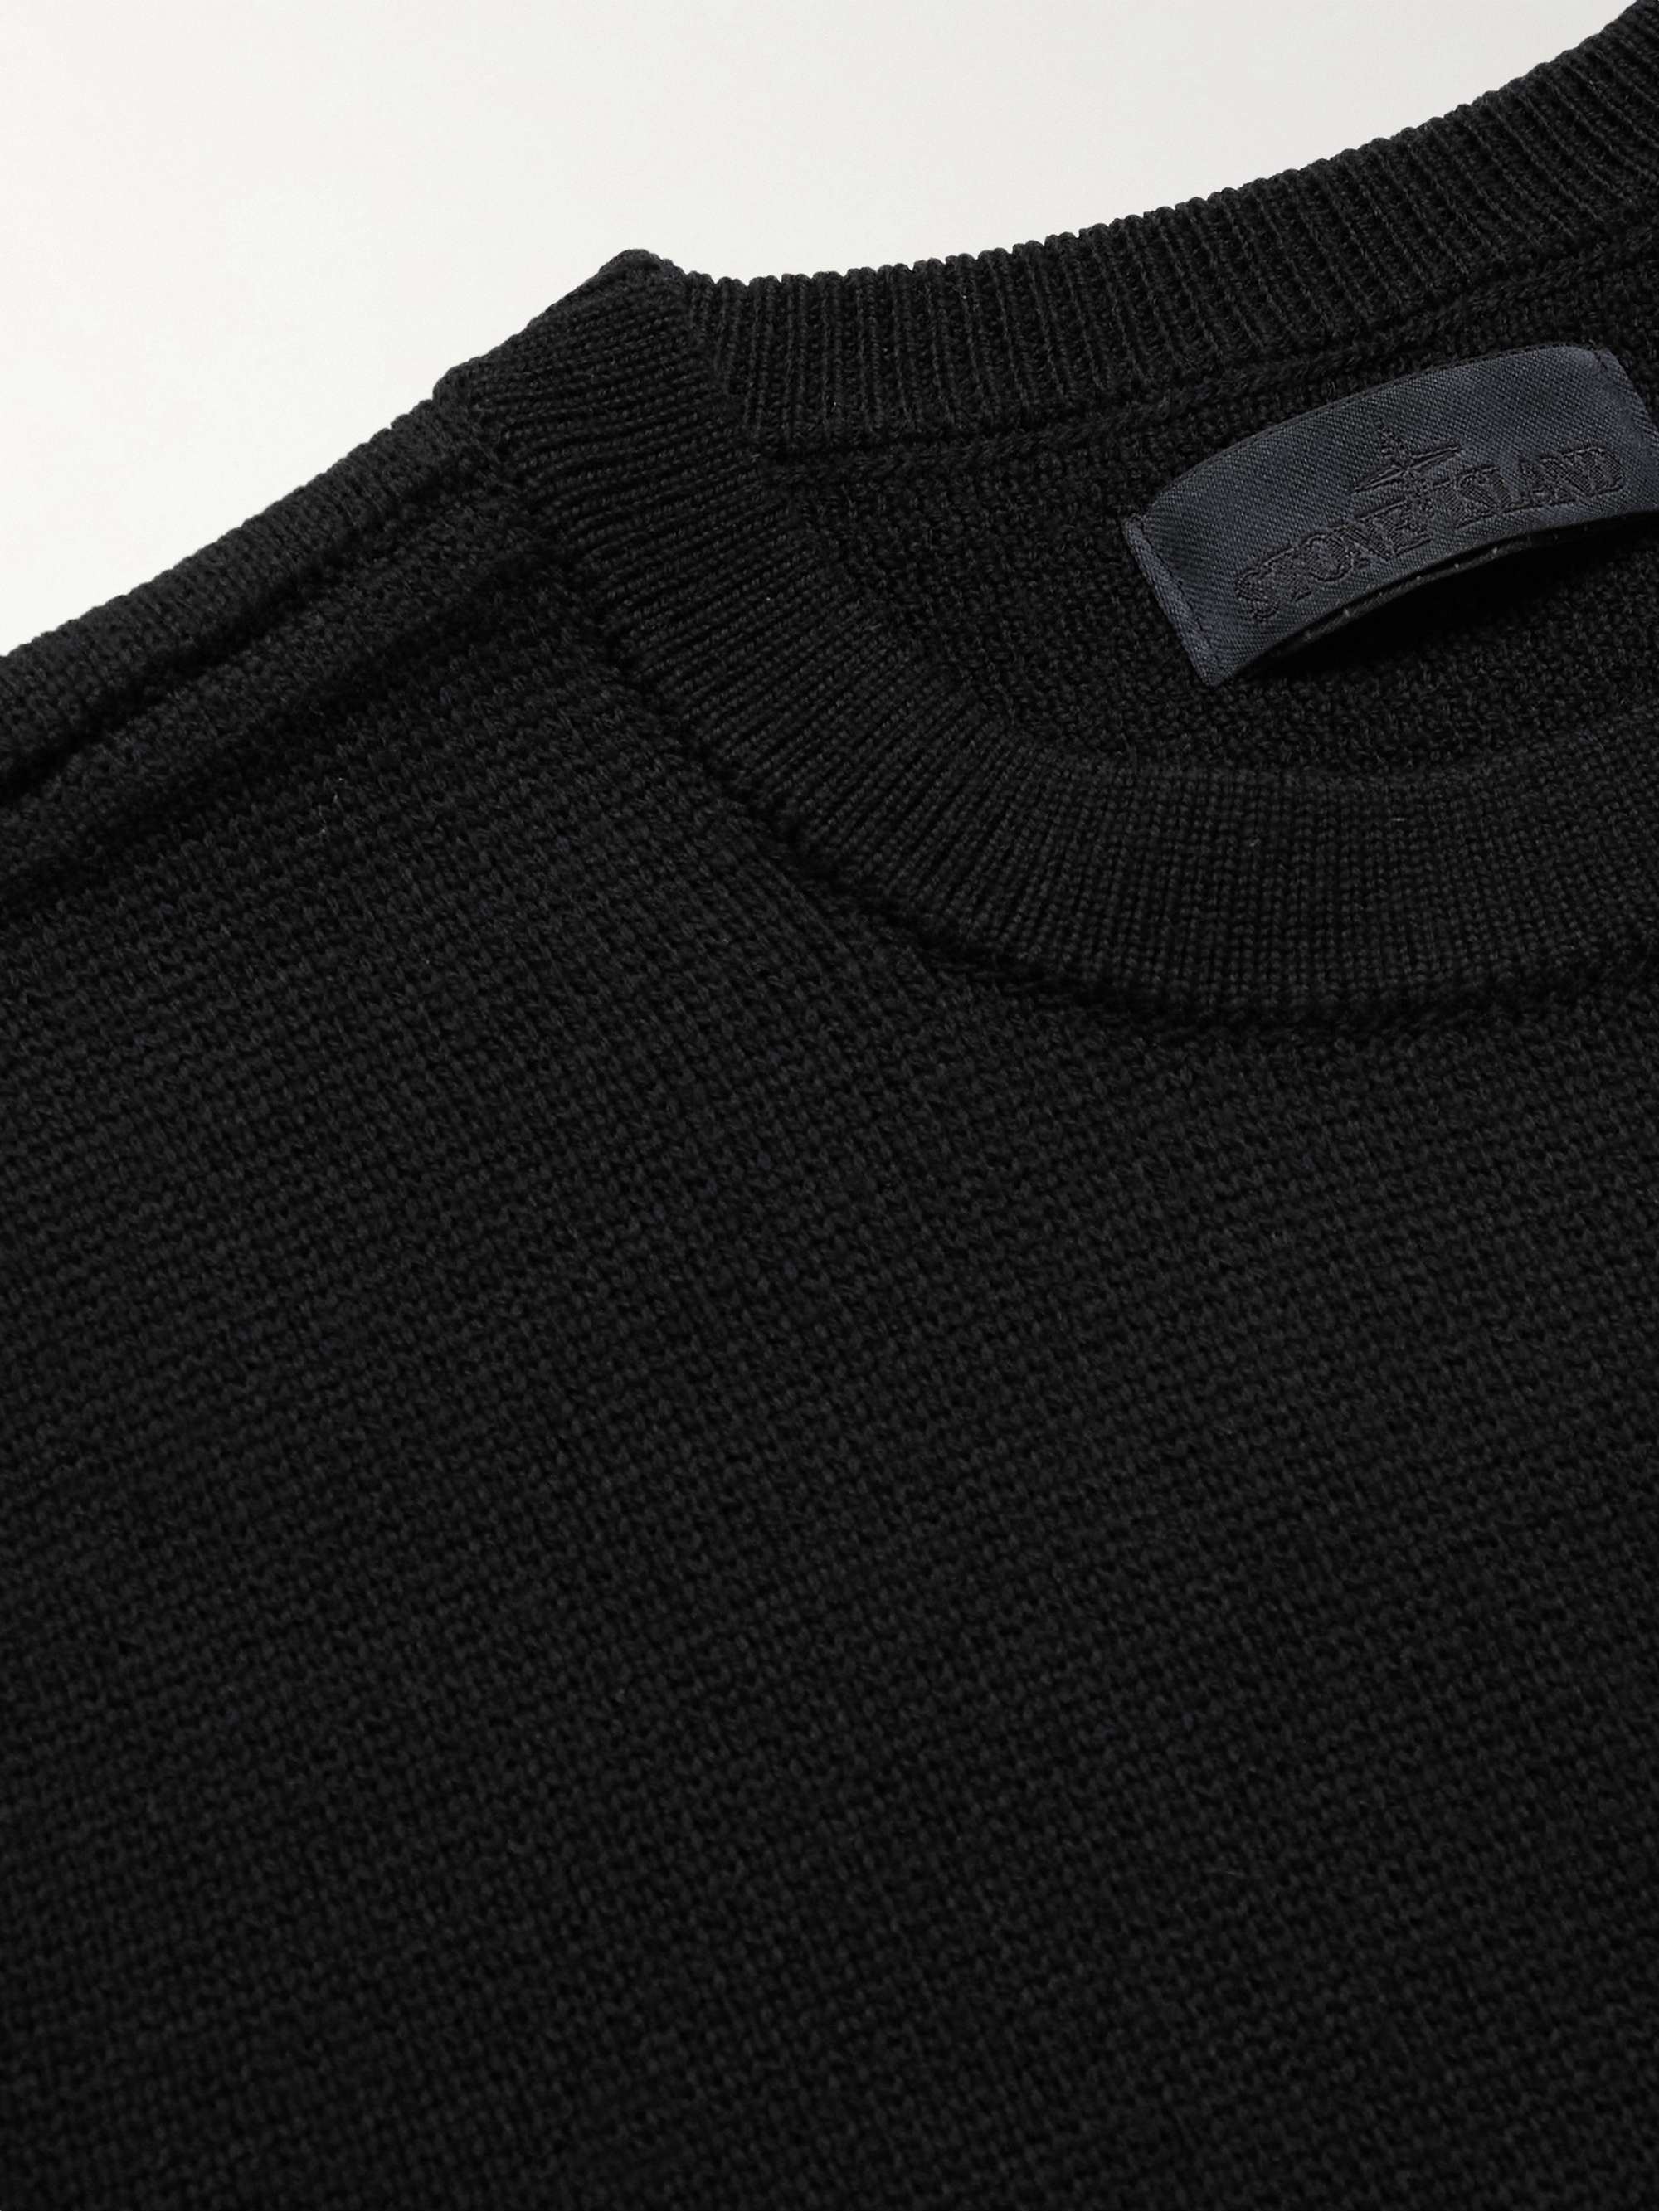 STONE ISLAND Slim-Fit Logo-Appliquéd Wool Sweater